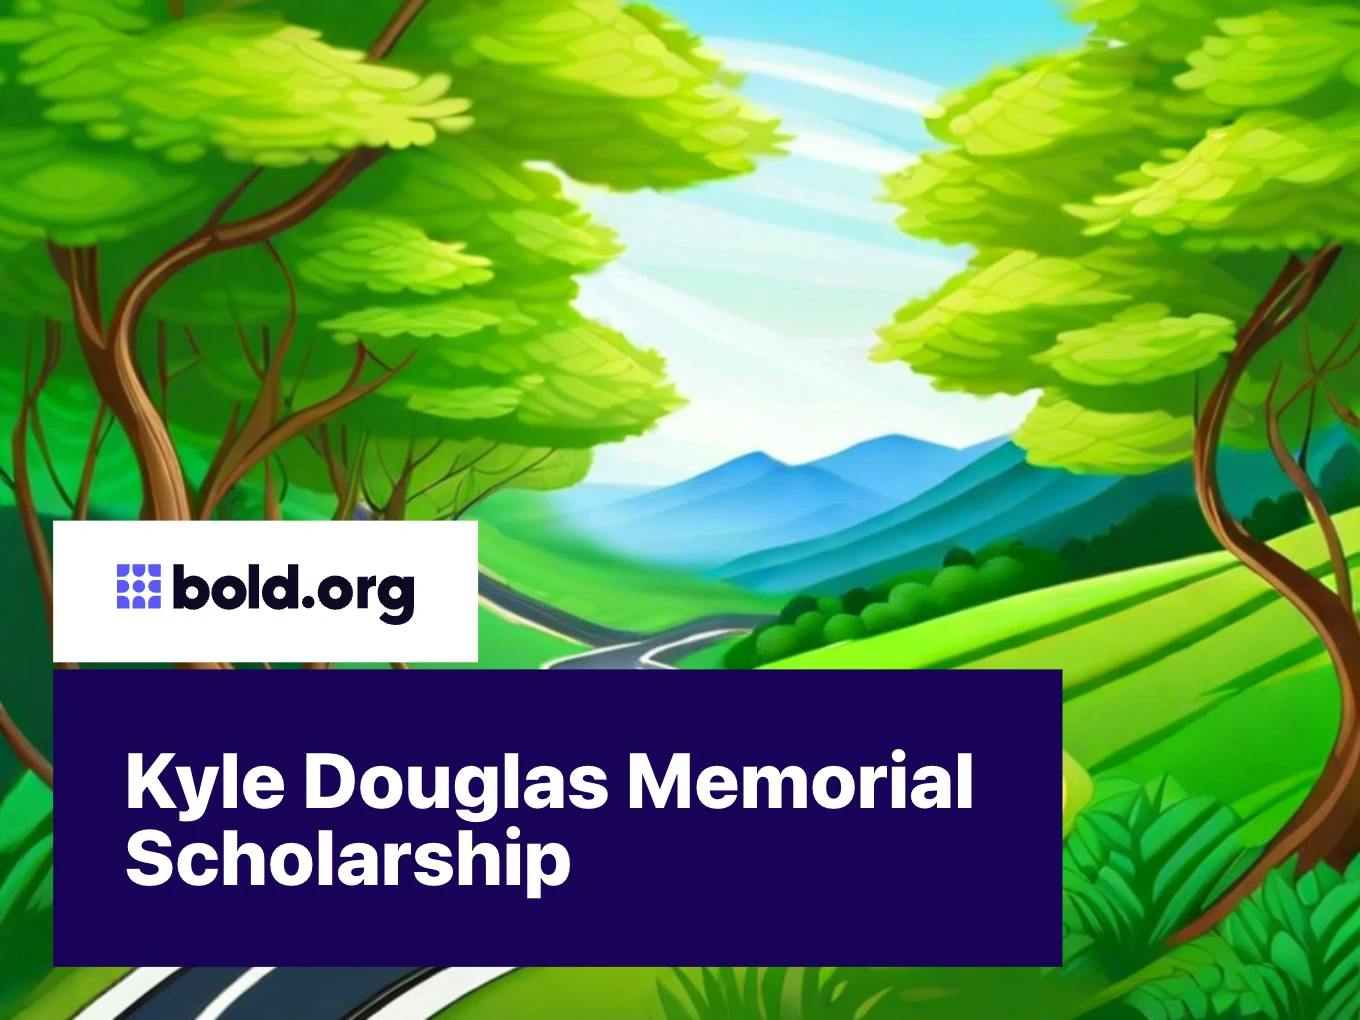 Kyle Douglas Memorial Scholarship